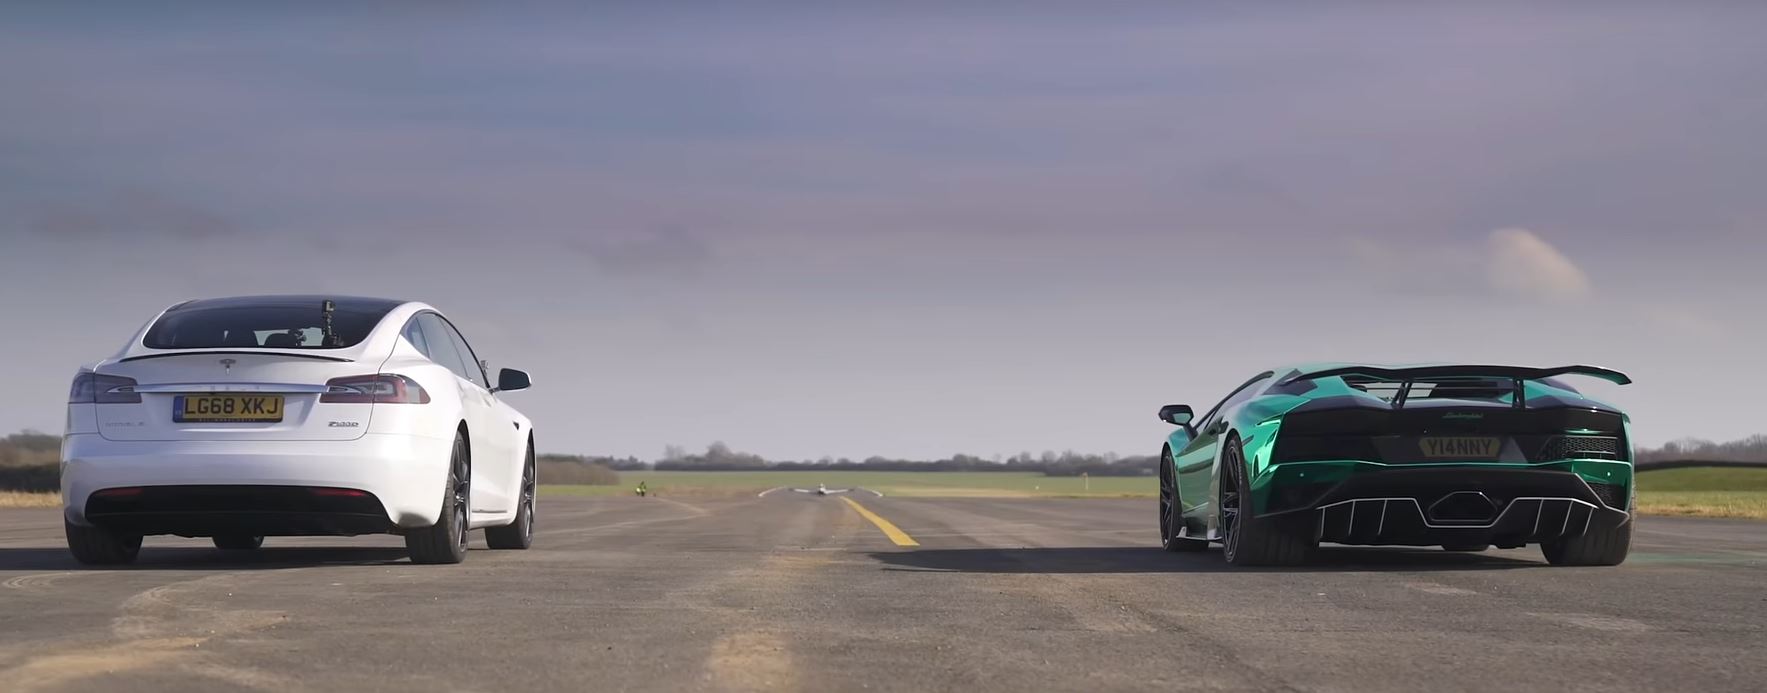 Tesla Model S P100d Vs Lamborghini Aventador S Drag Race Is